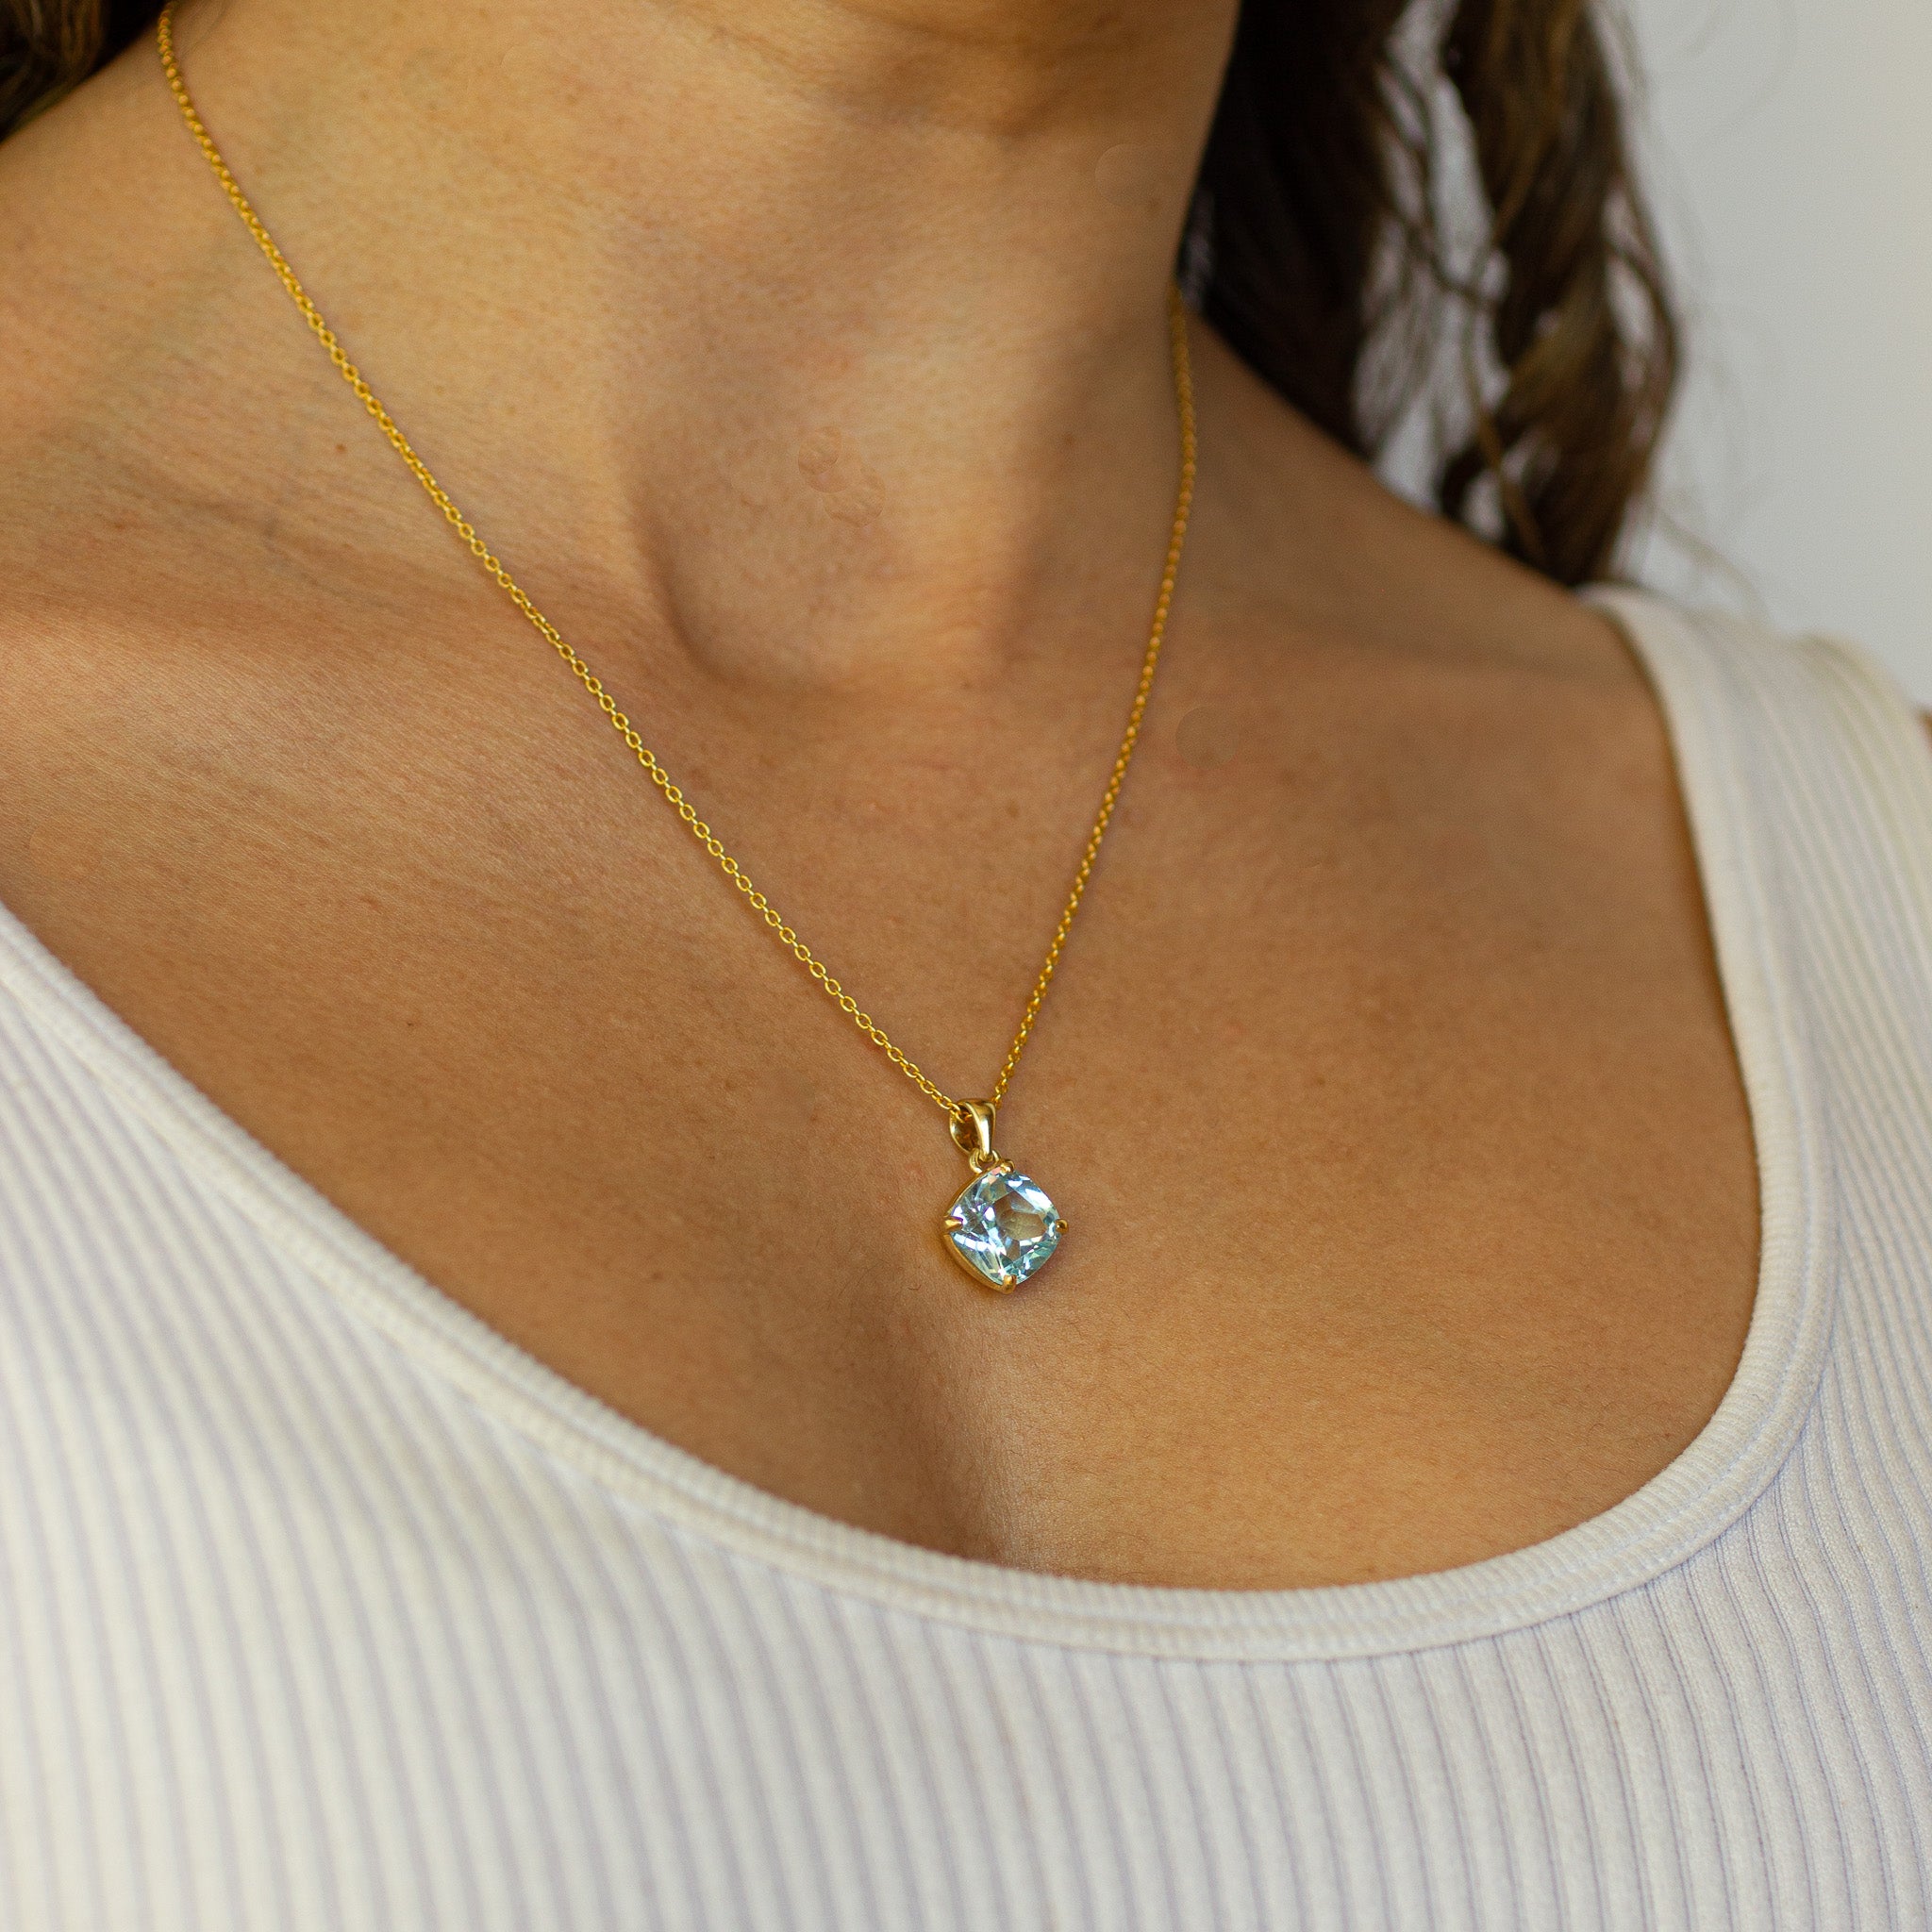 Oval Blue Topaz Necklace, Birthstone Necklace - Shraddha Shree Gems